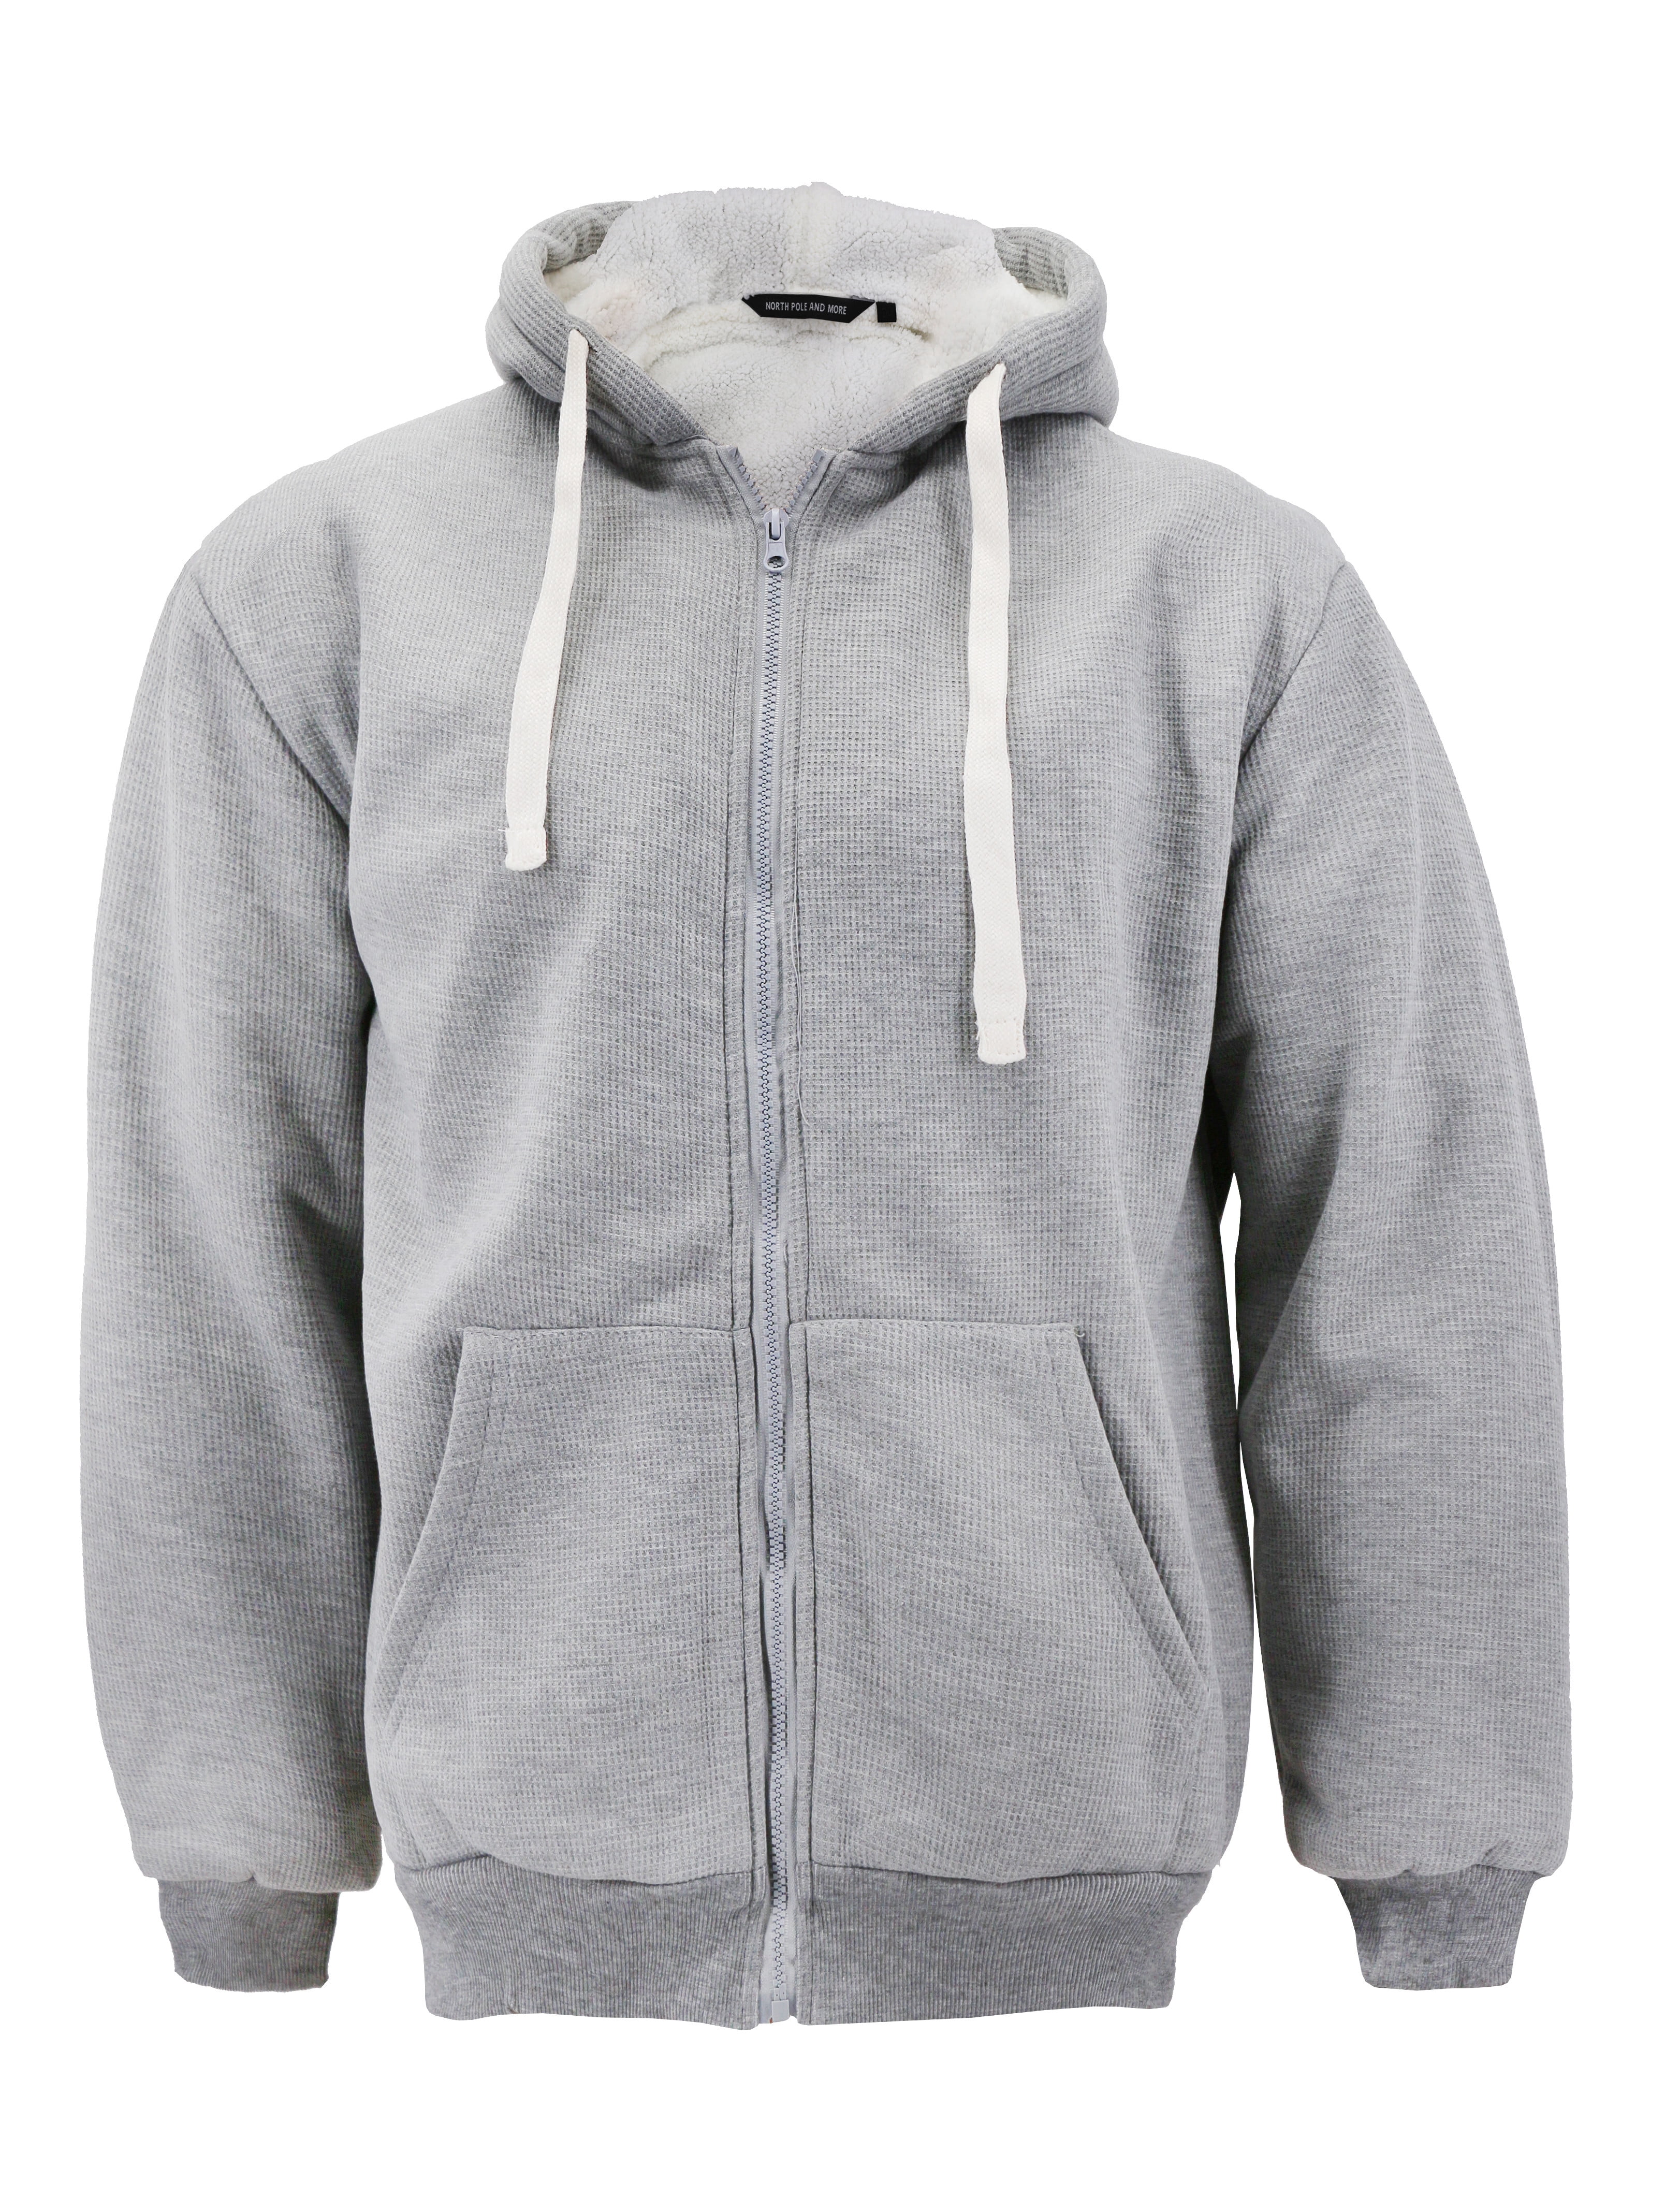 Warm Winter Hoodies for Mens Teen Boys Heavyweight Fleece Sweatshirt Full Zip Thick Sherpa Lined